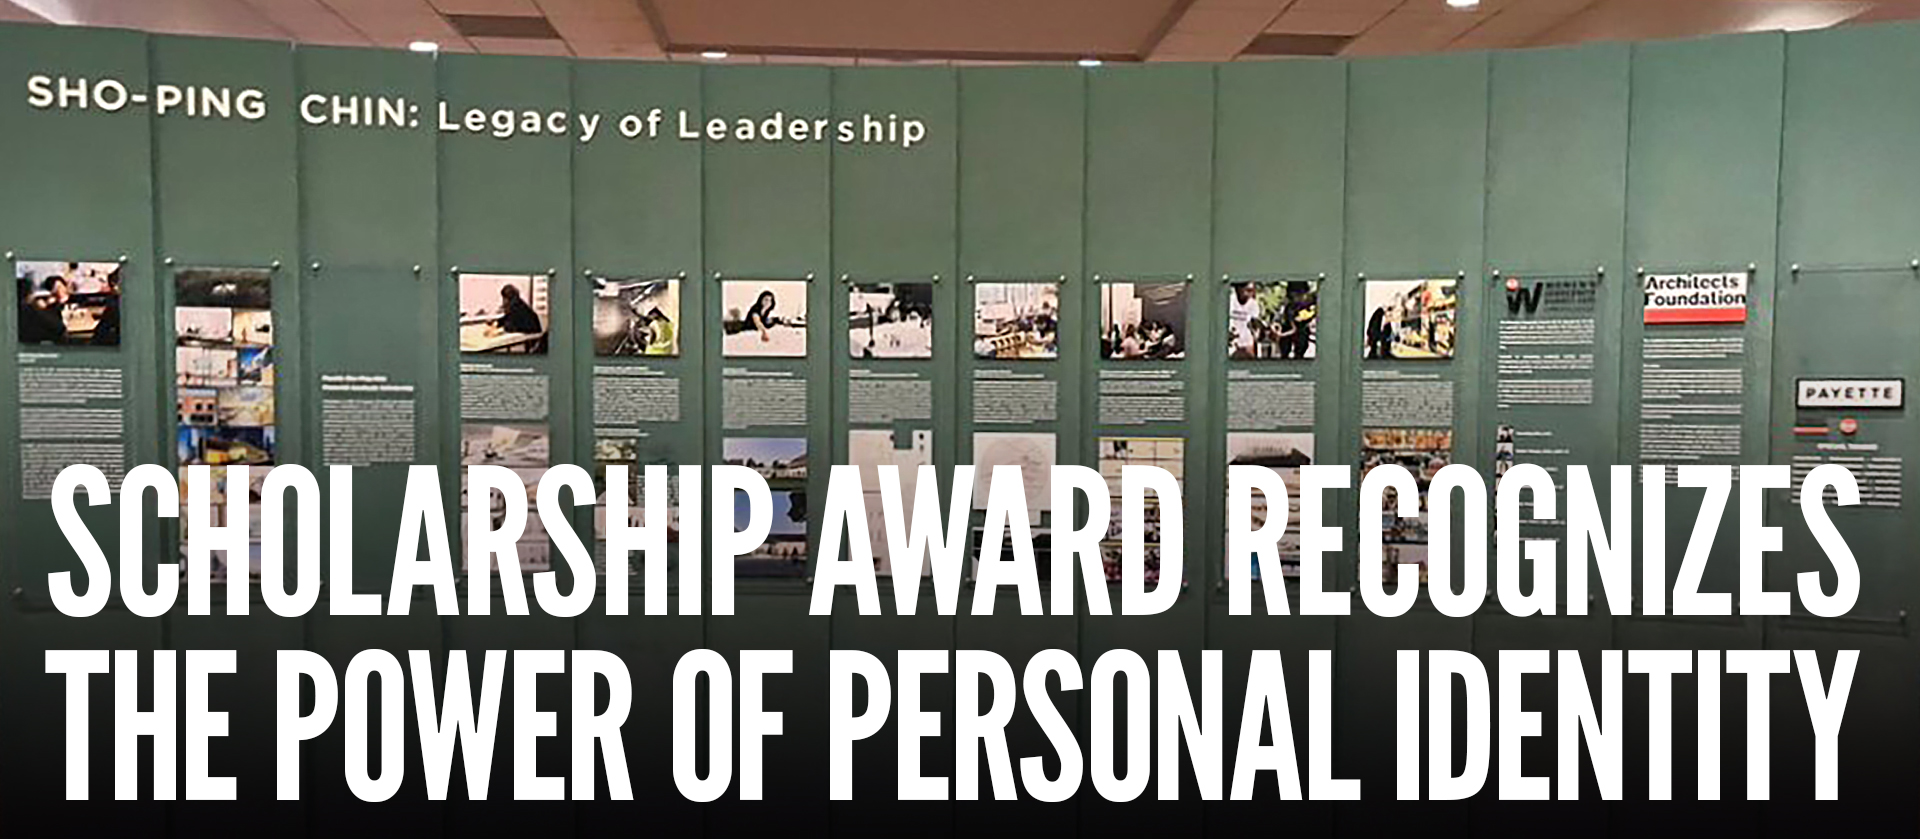 Scholarship Award Recognizes Power of Personal Identity